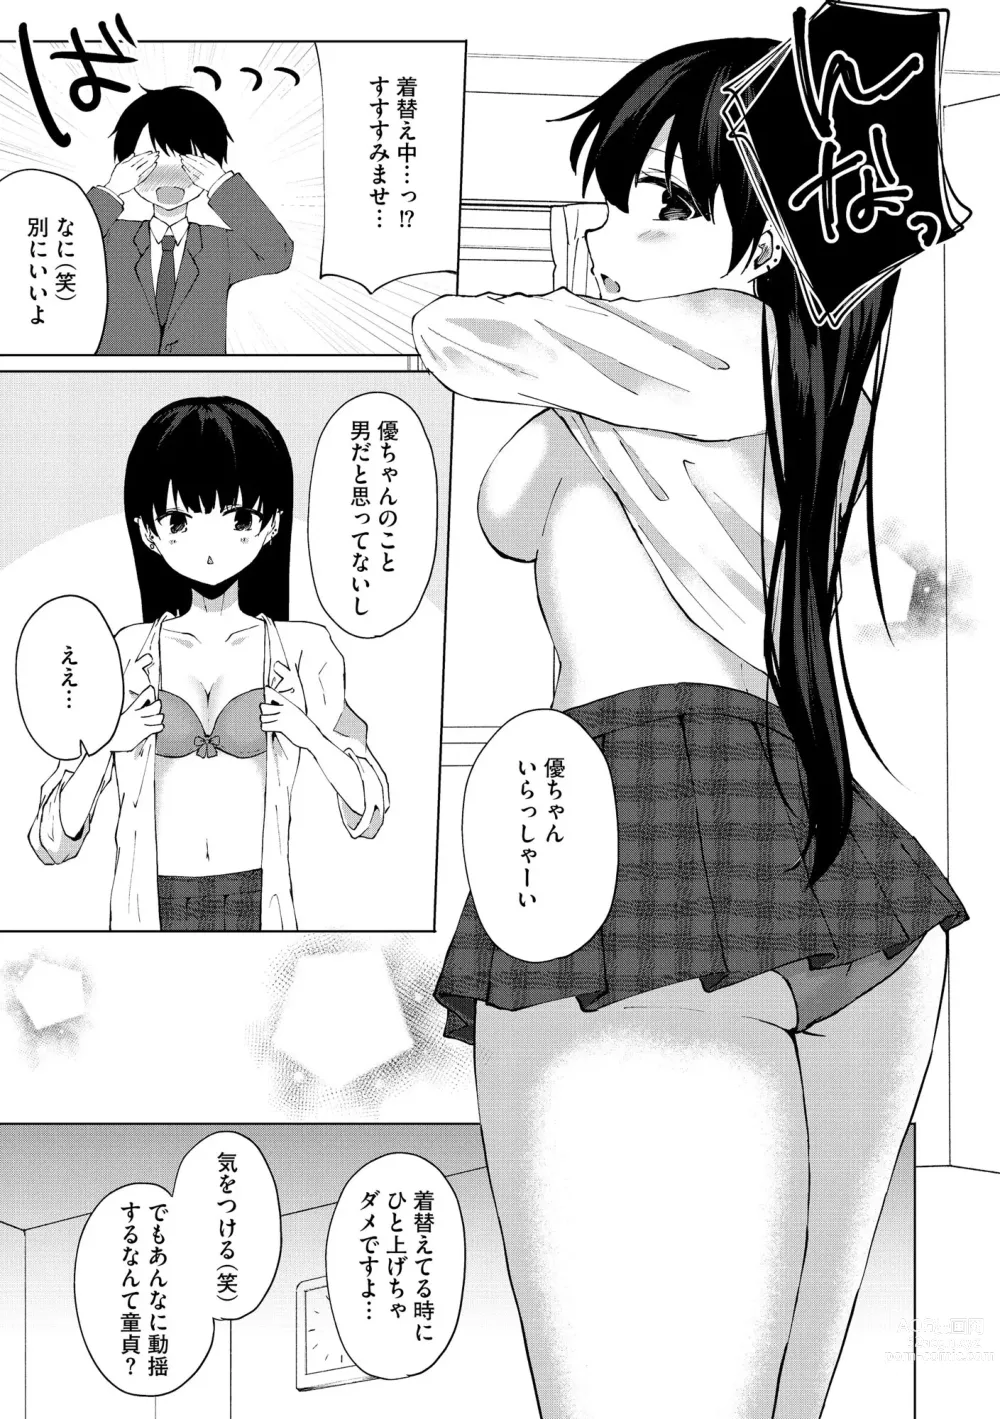 Page 9 of manga Cyberia Plus Vol. 12